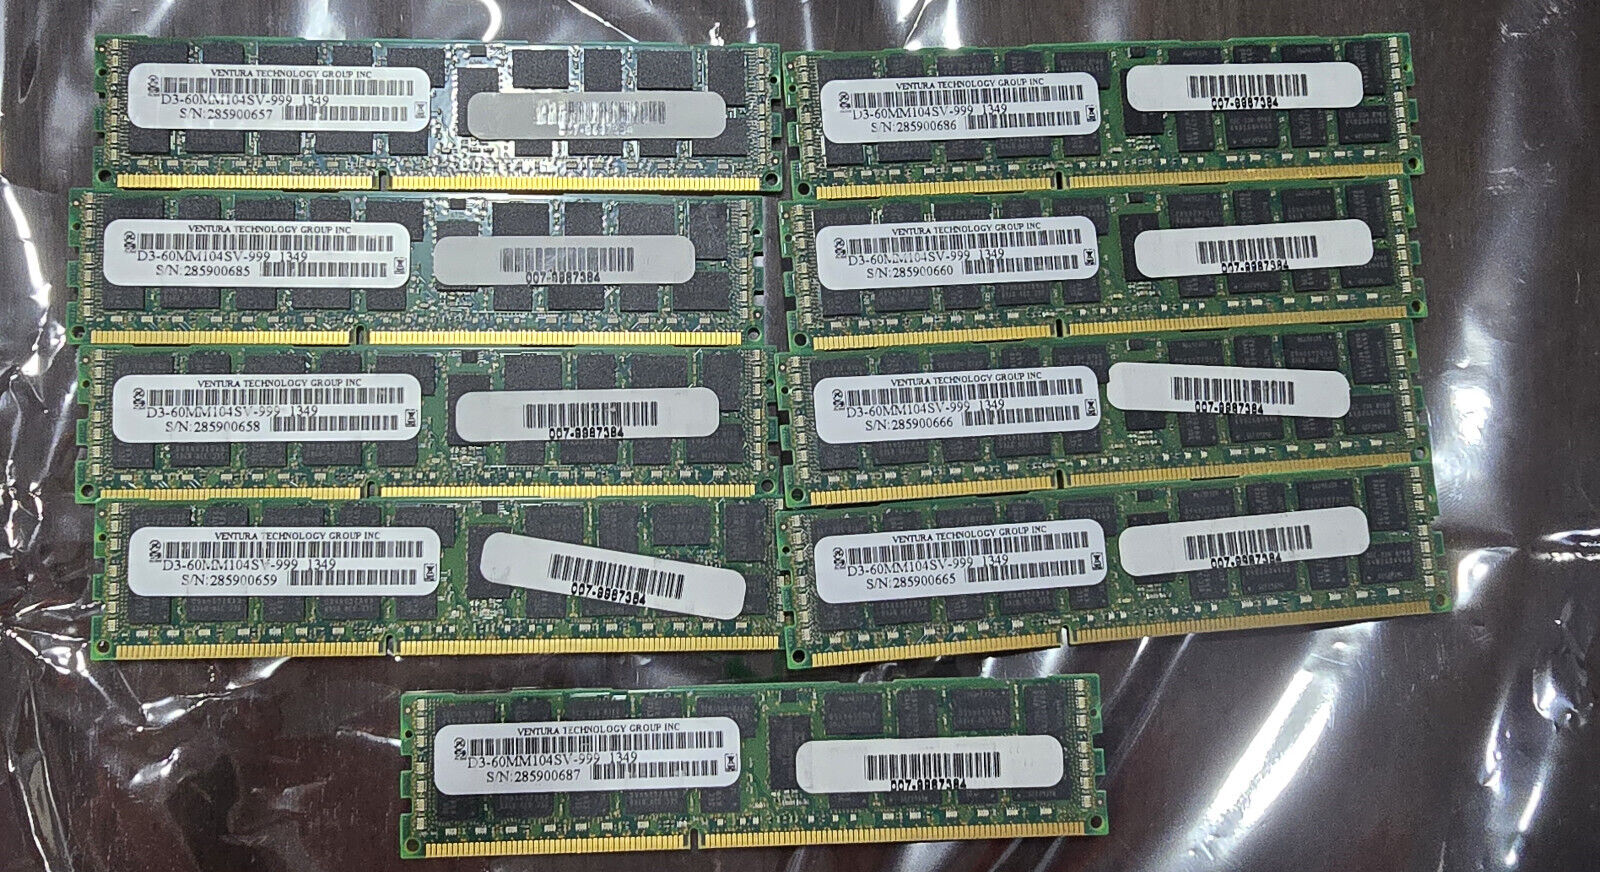 Lot Of 9 Ventura Technology D3-60MM104SV-999 1349 1.5V 8GB Memory DDR3 72GB